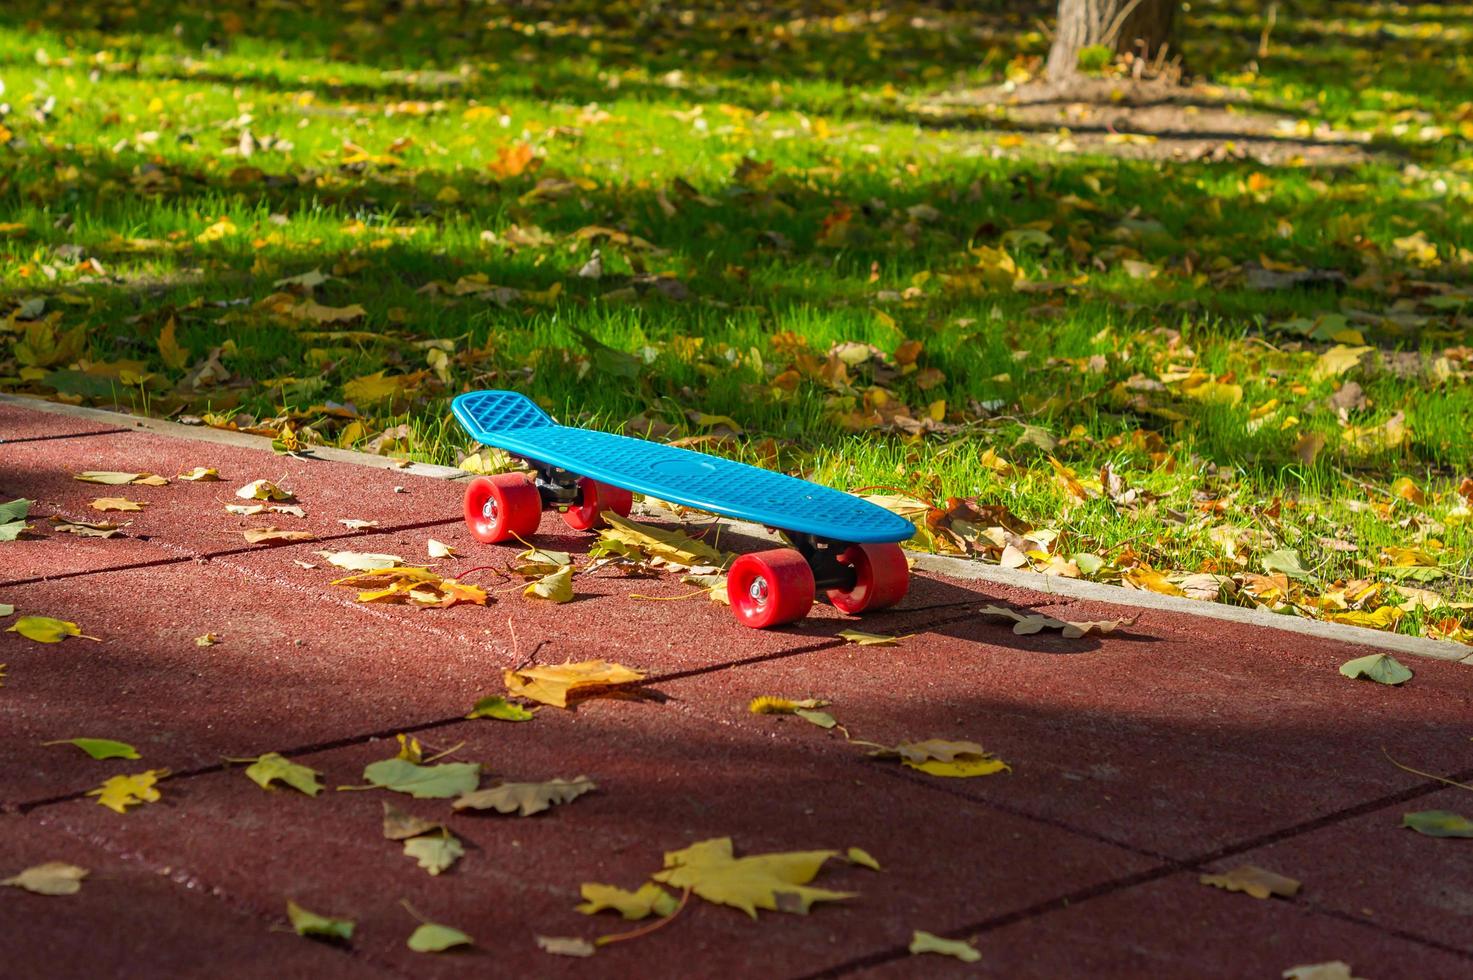 abandoned skateboard in park photo